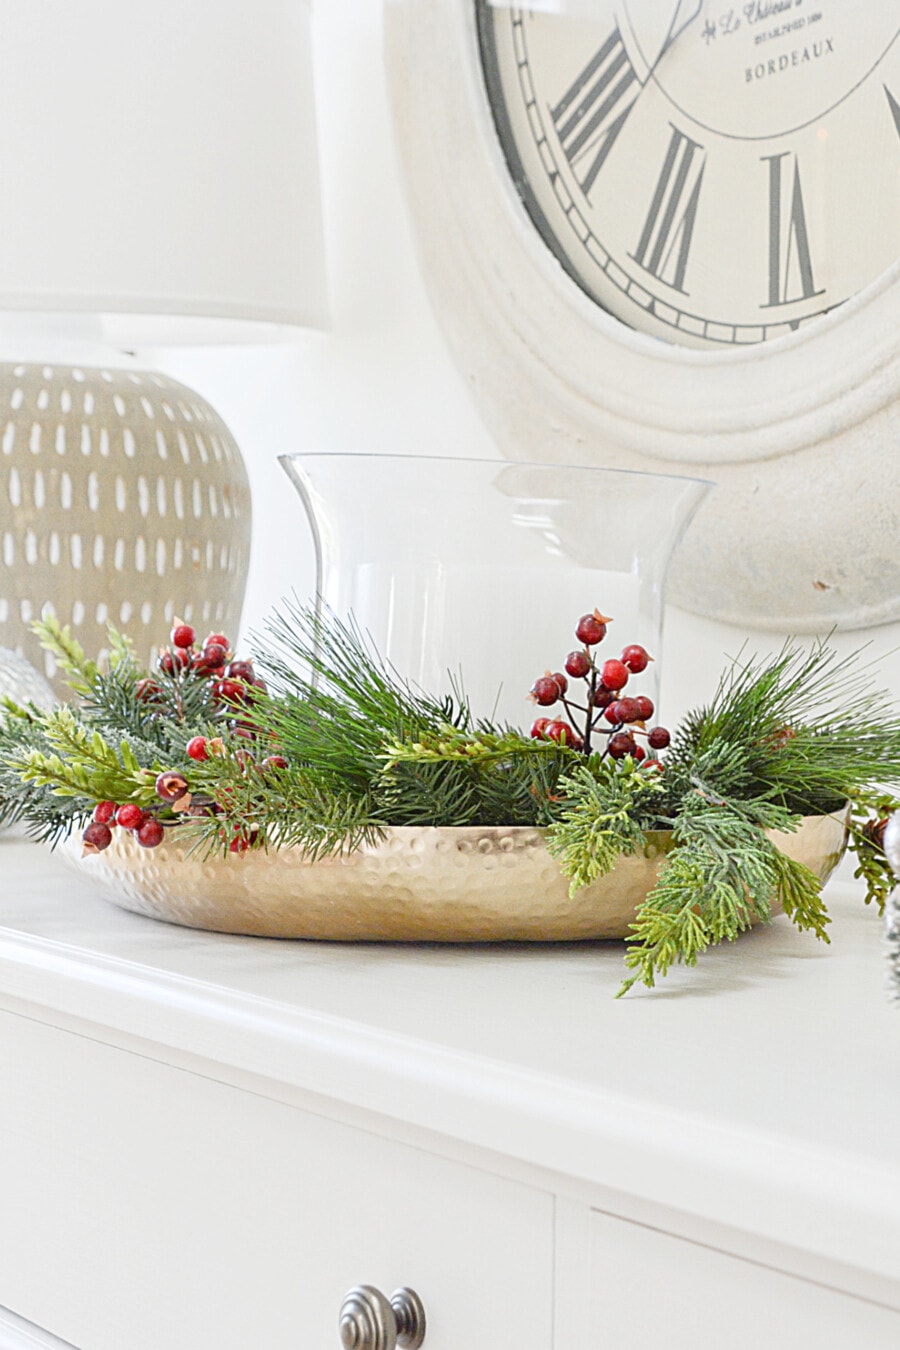 9 Easy Last-Minute Christmas Decorating Ideas